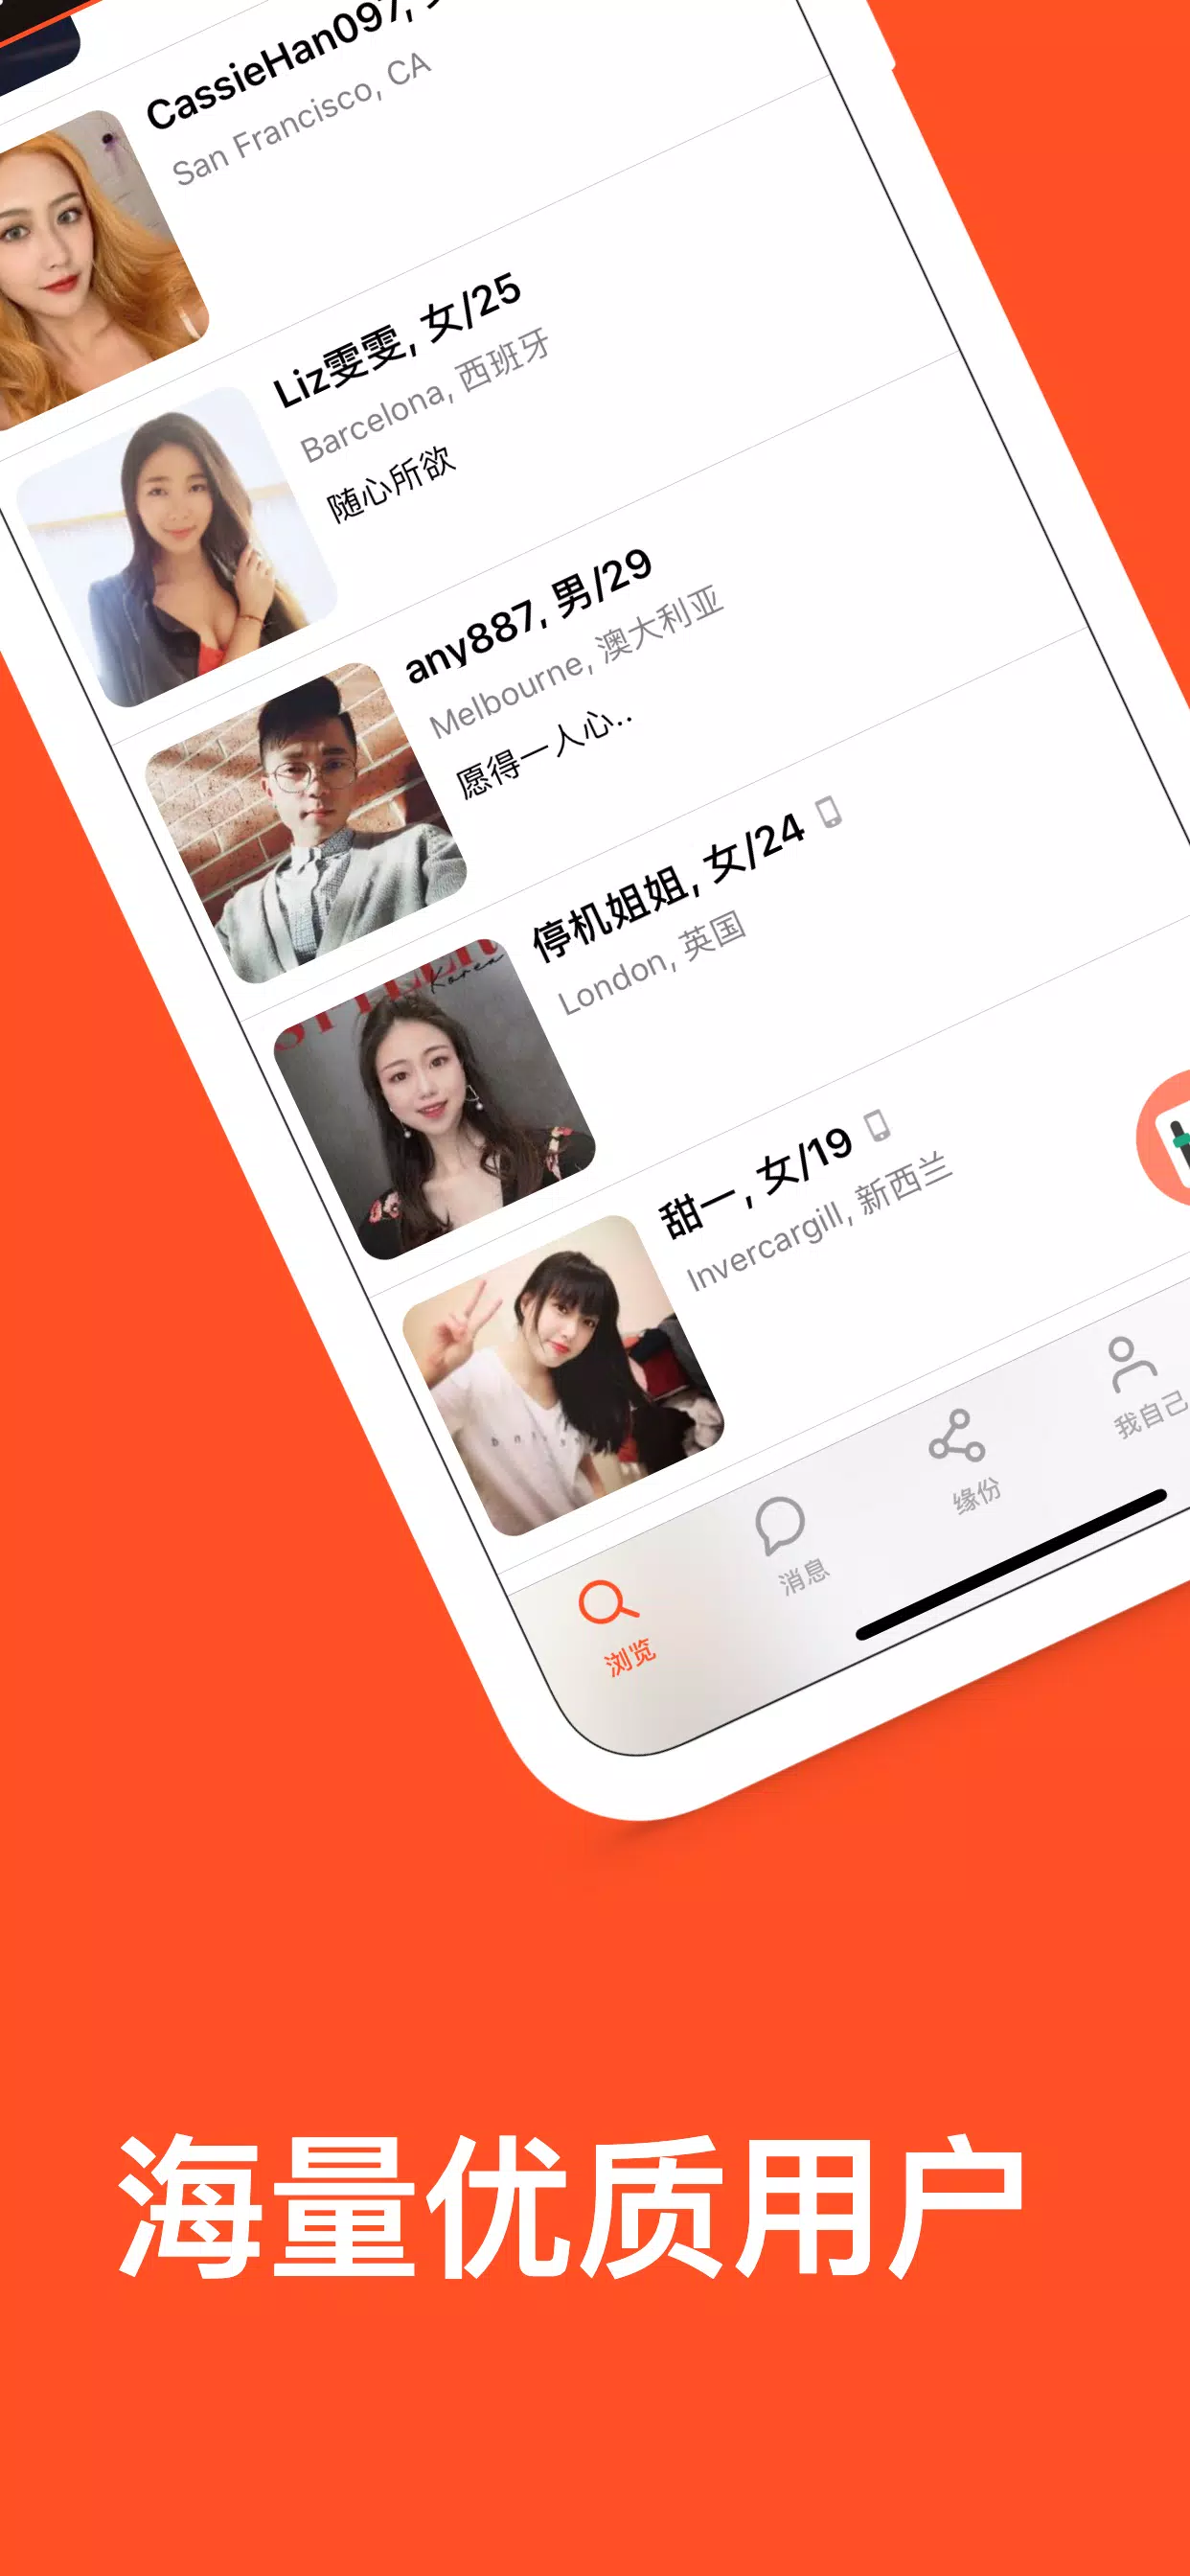 Lovevite Chinese Dating (交友约会) Screenshot2